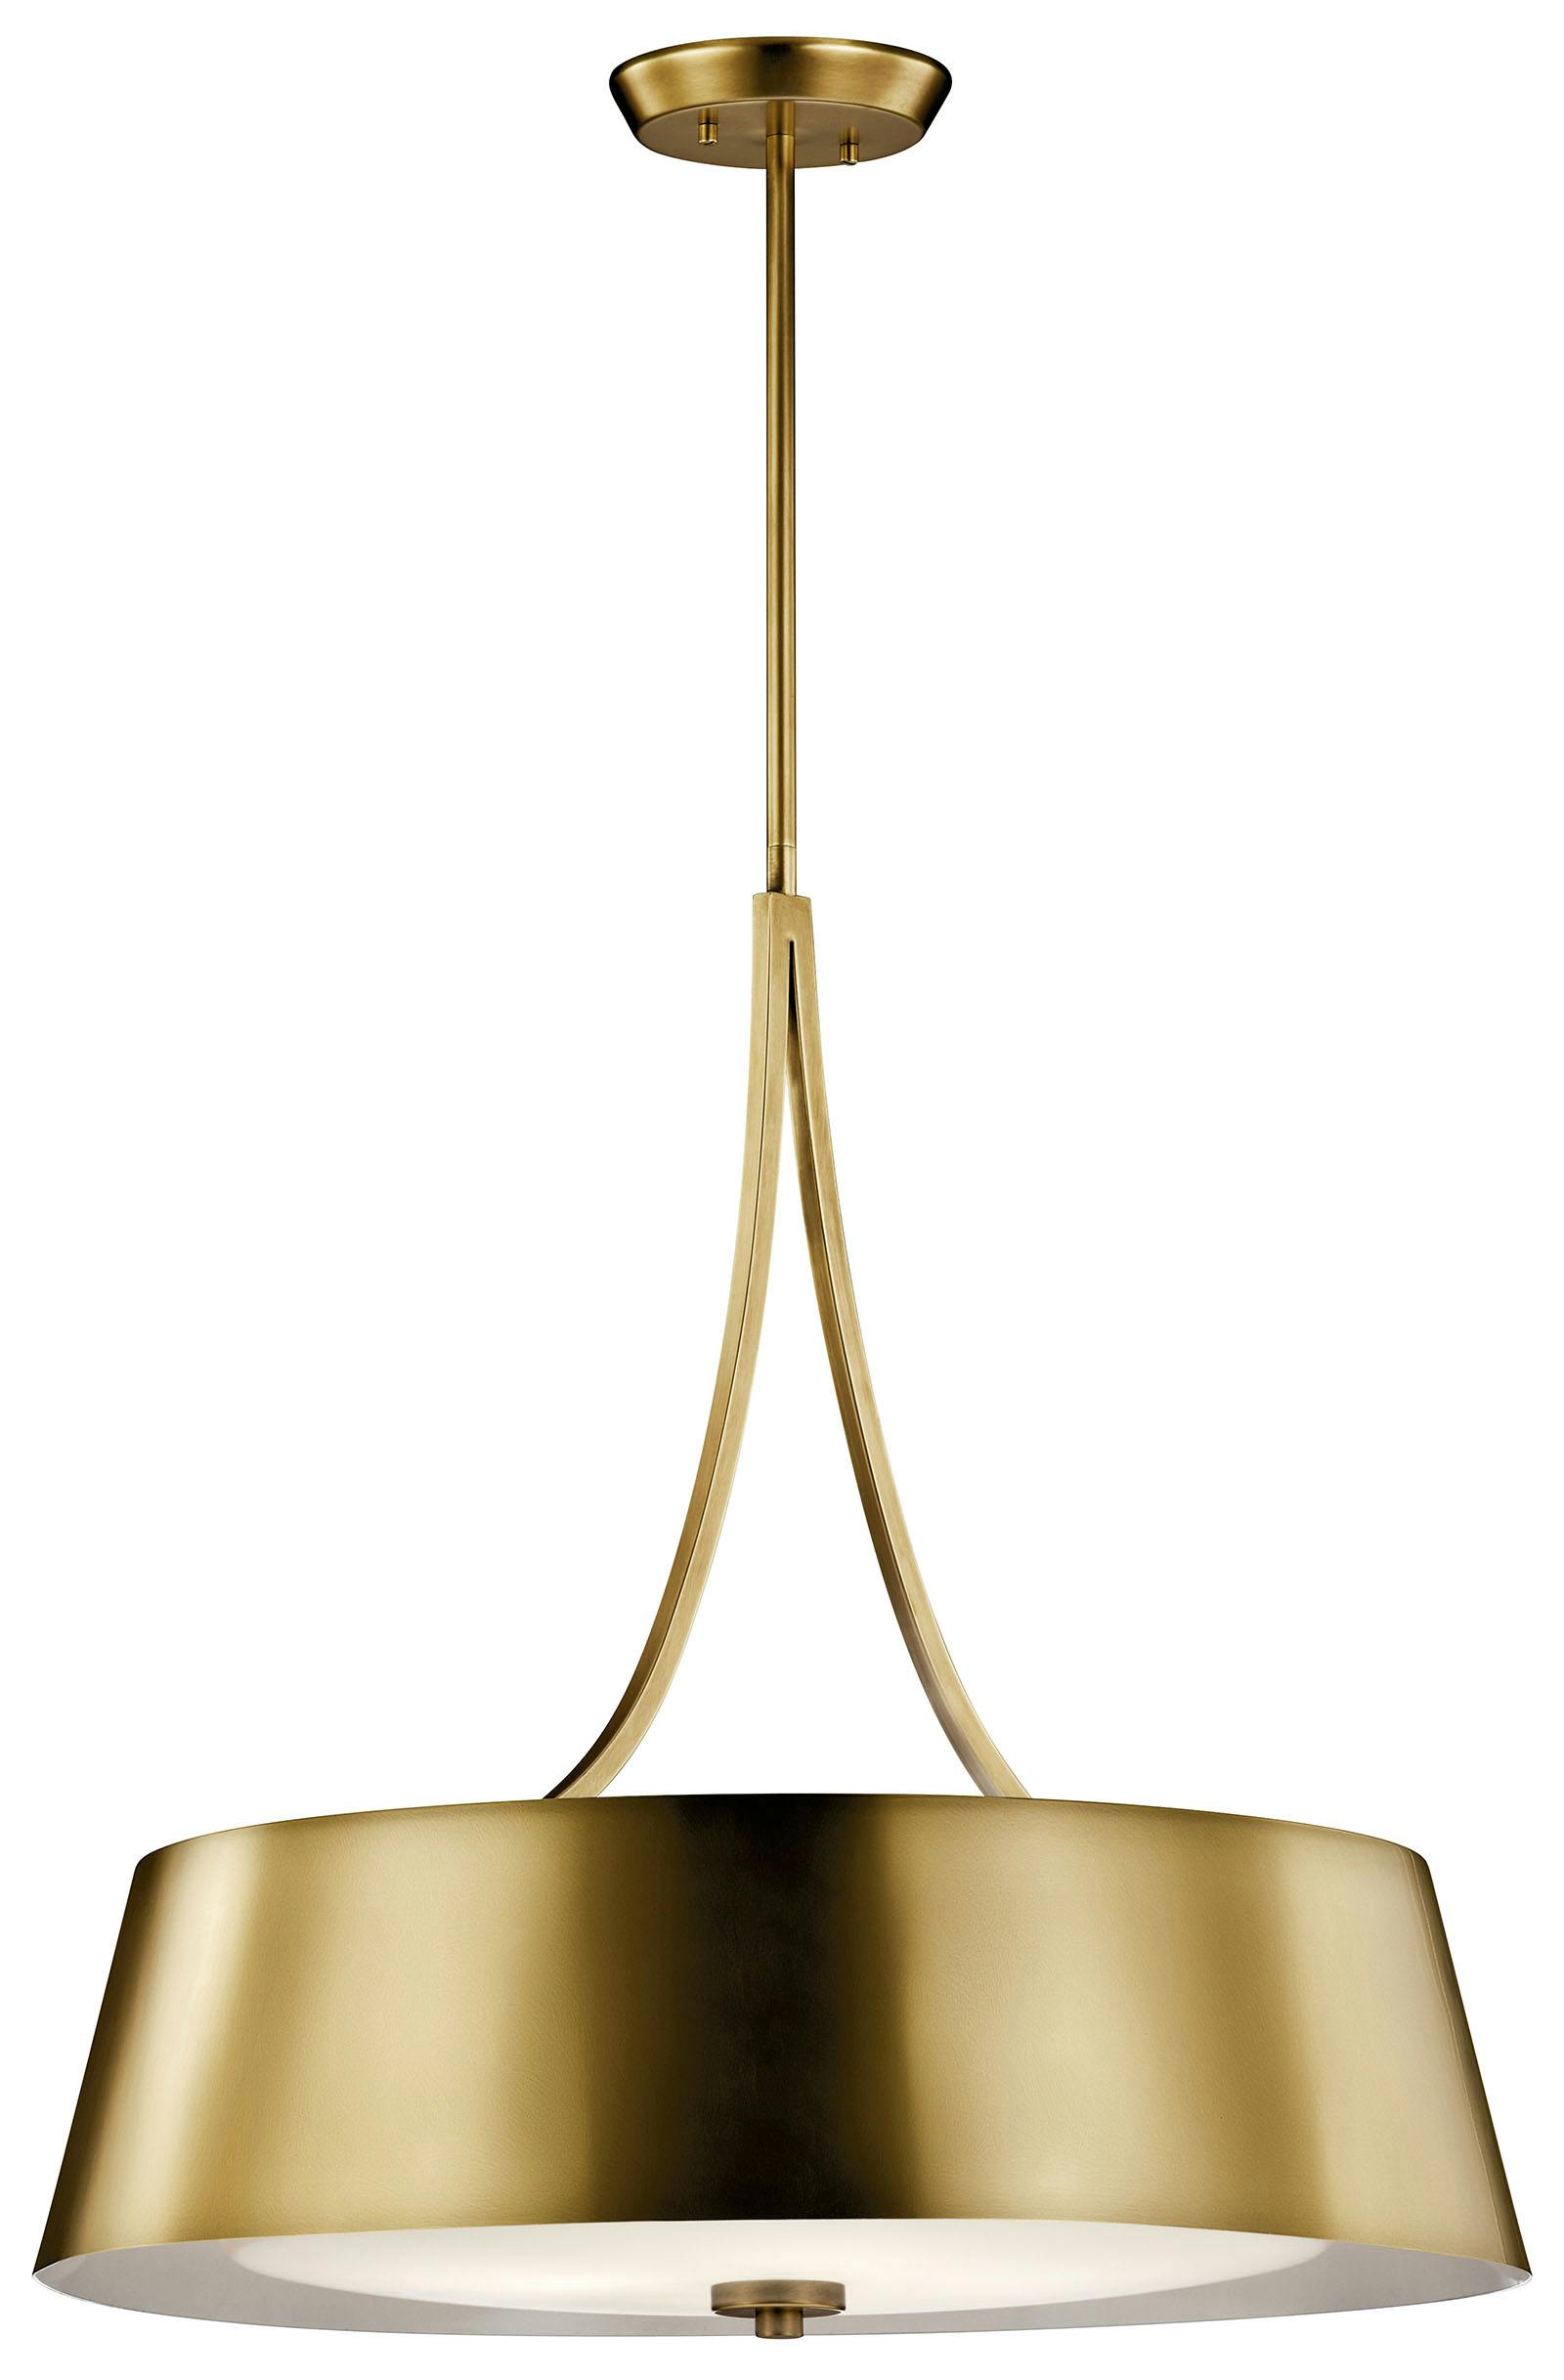 Maclain 4 Light Round Pendant Bronze on a white background